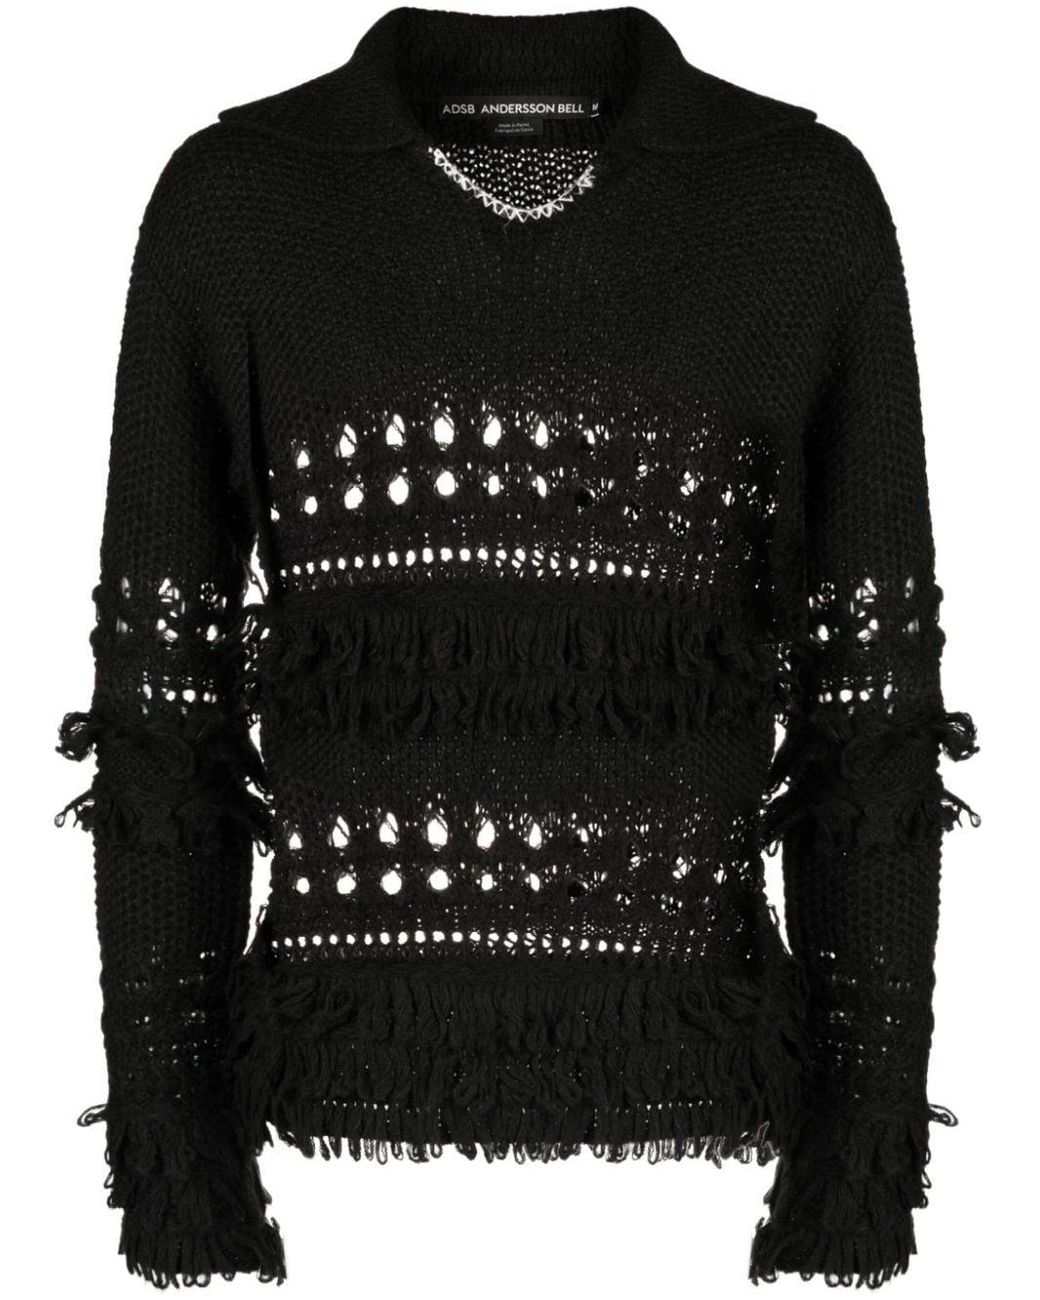 ANDERSSON BELL Crochet-knit Fringed Jumper in Black | Lyst